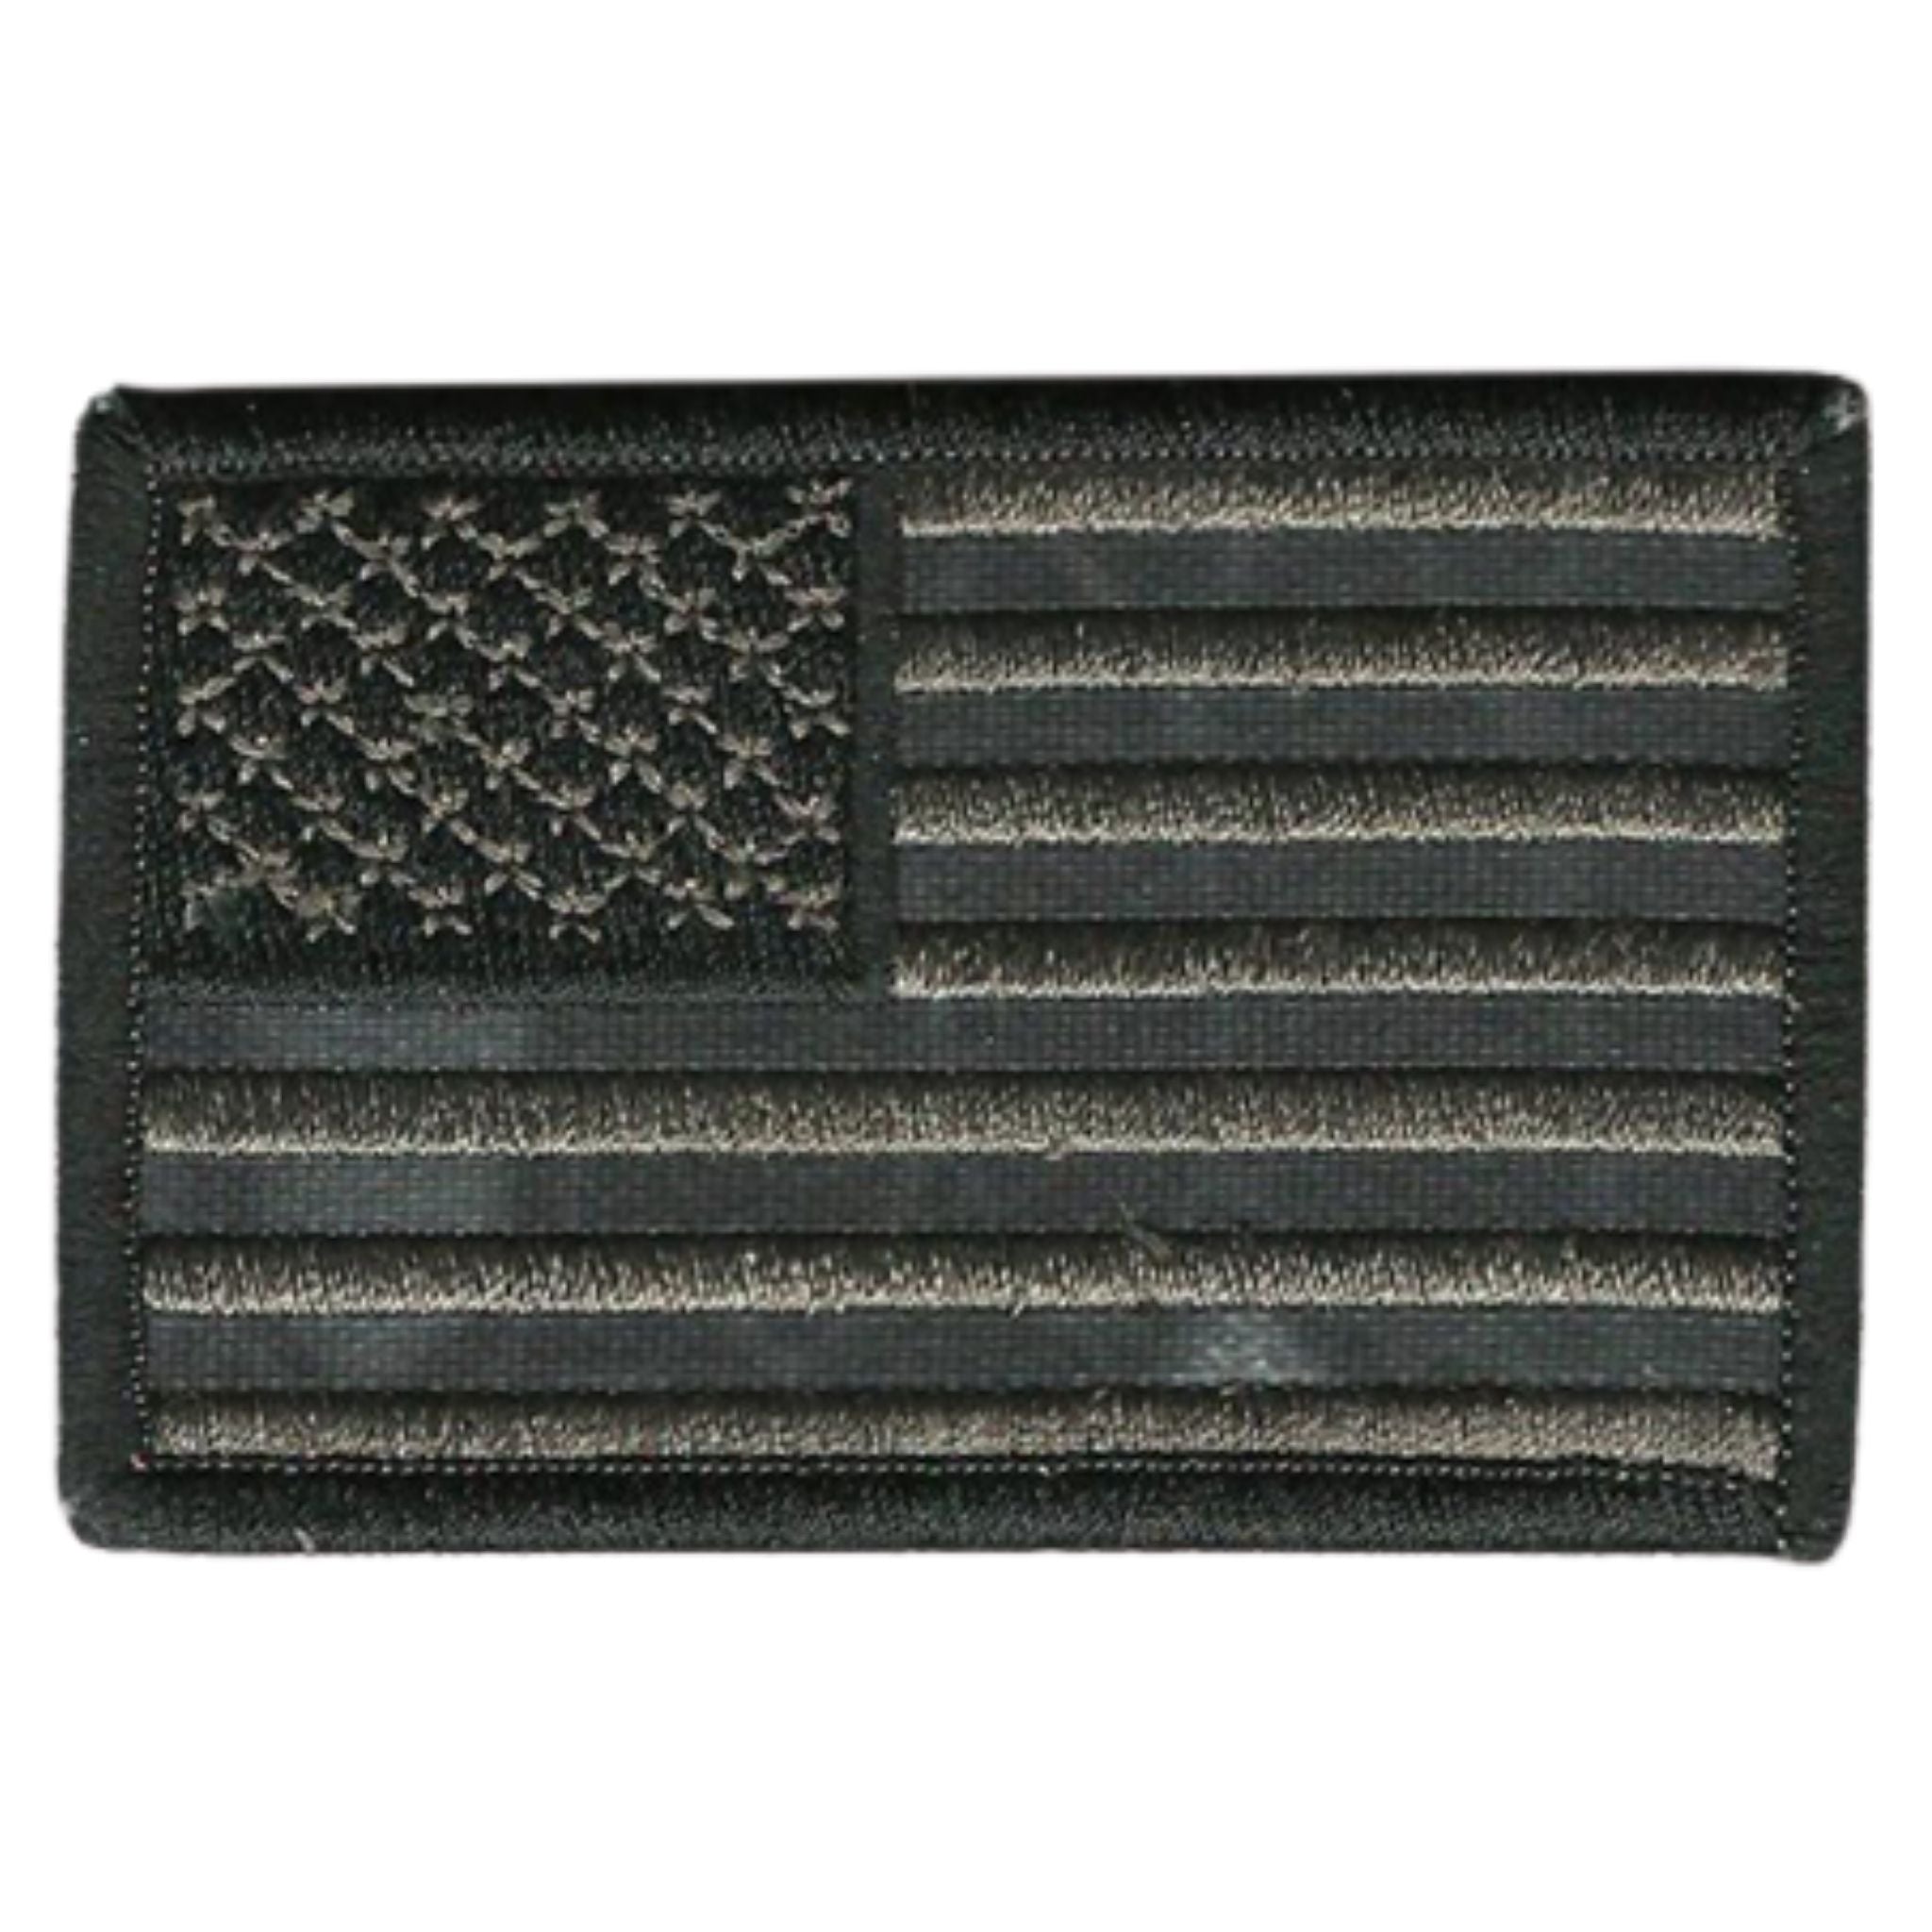 US Flag Patch - Black-White